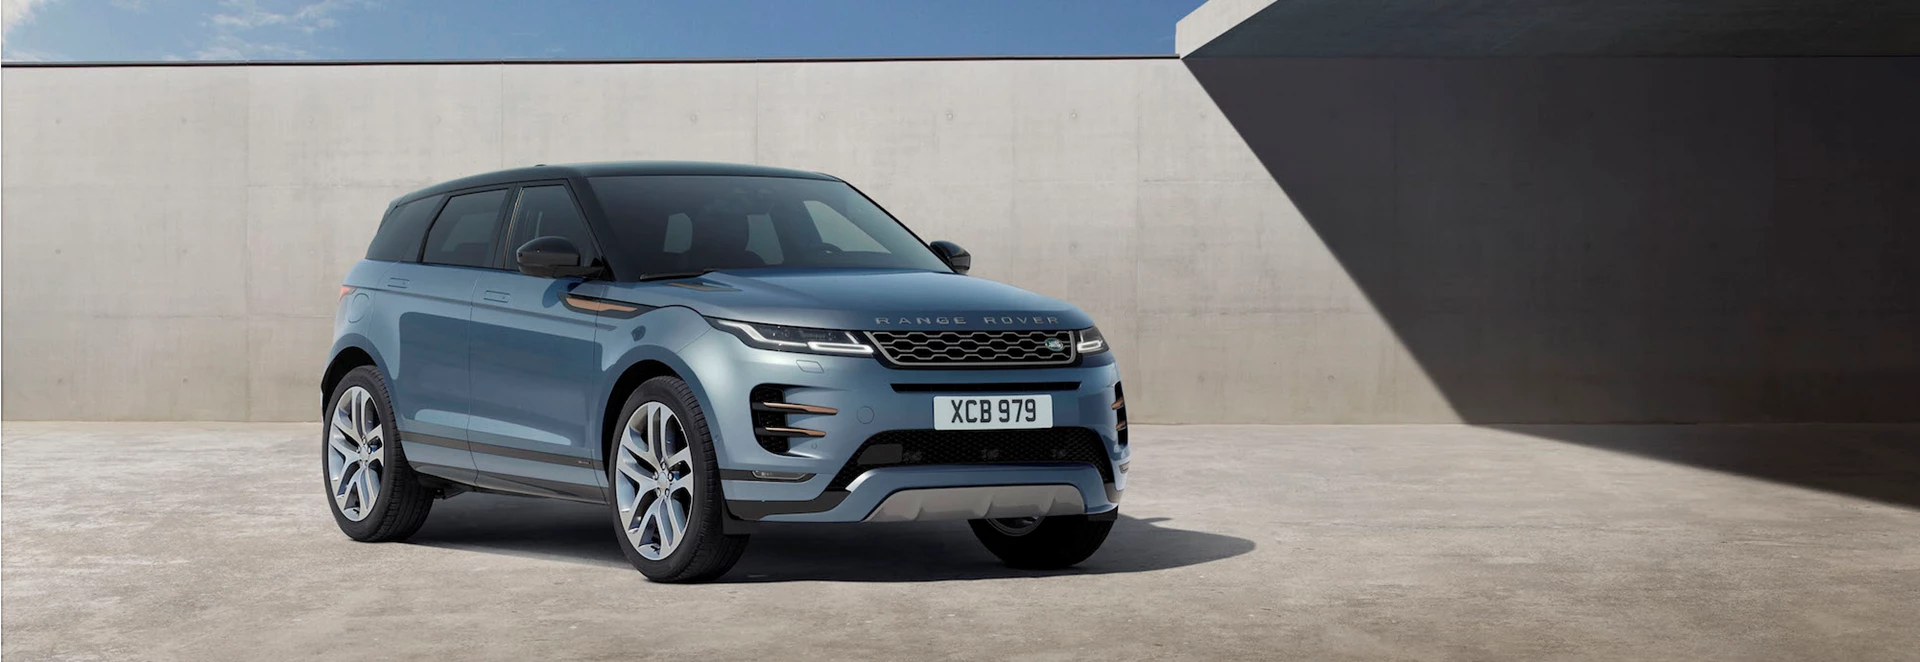 Land Rover unveils 2019 Range Rover Evoque 